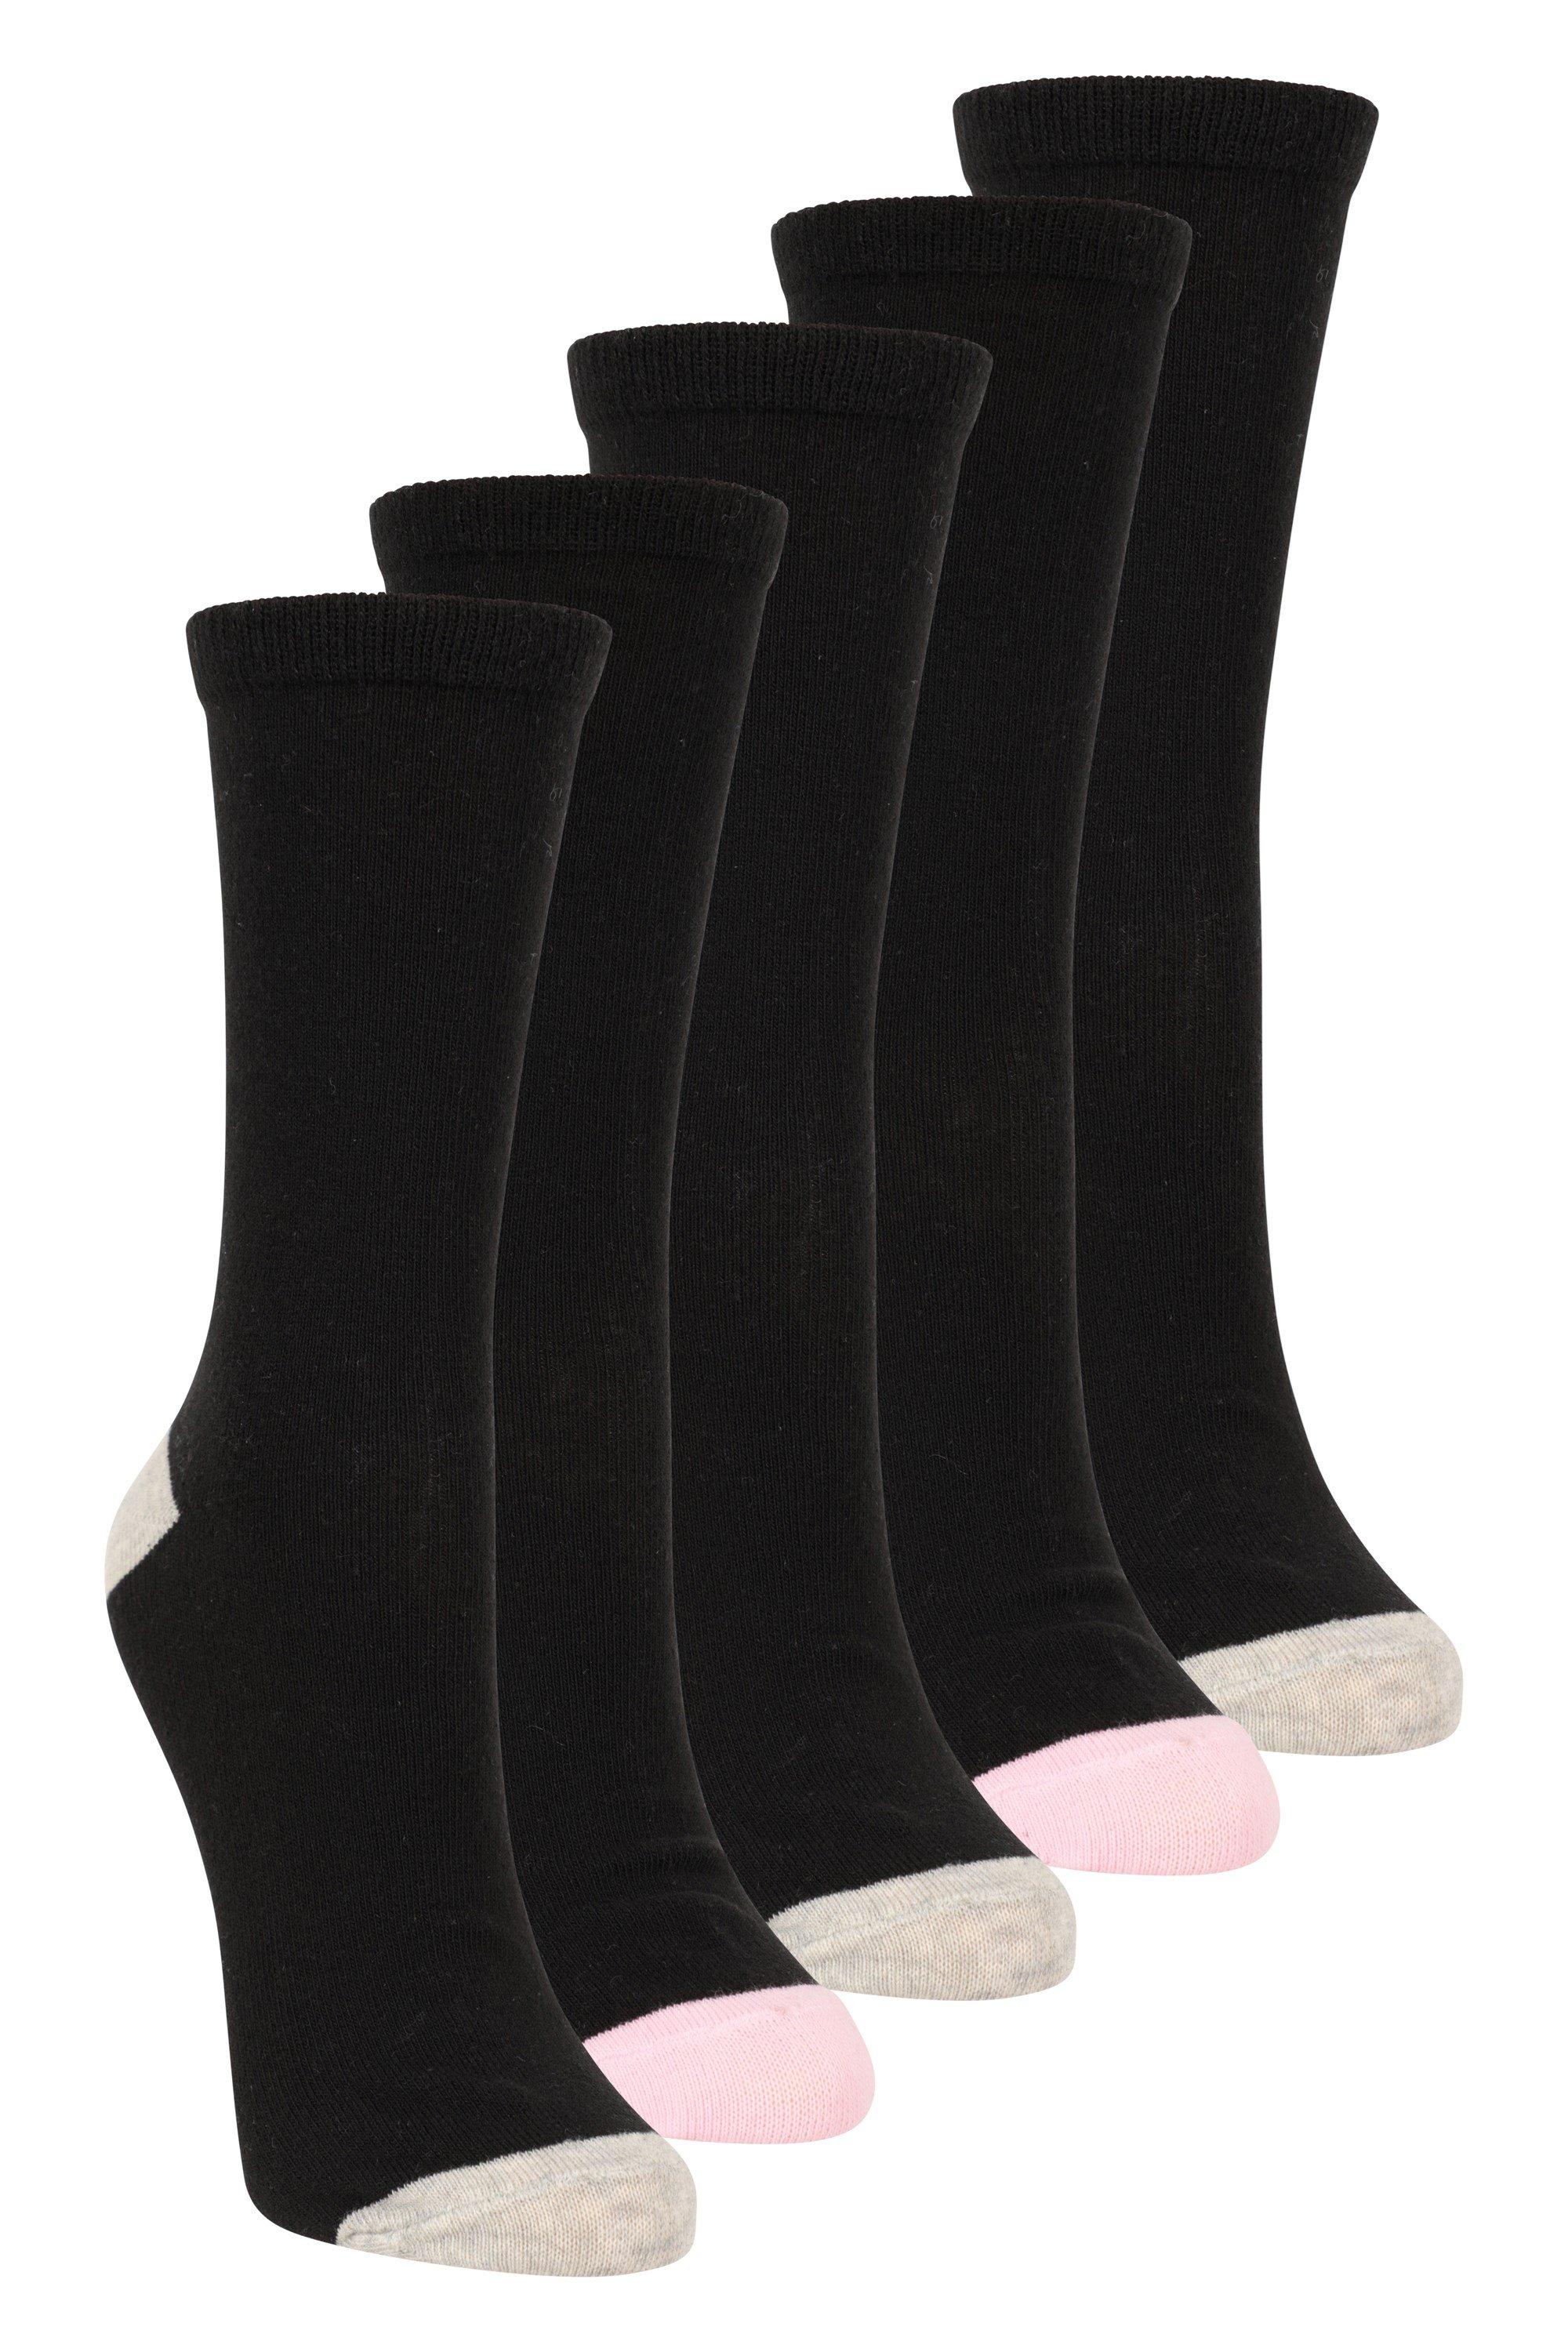 Polygiene Everyday Mid Calf Socks Stretchy 5 Pack